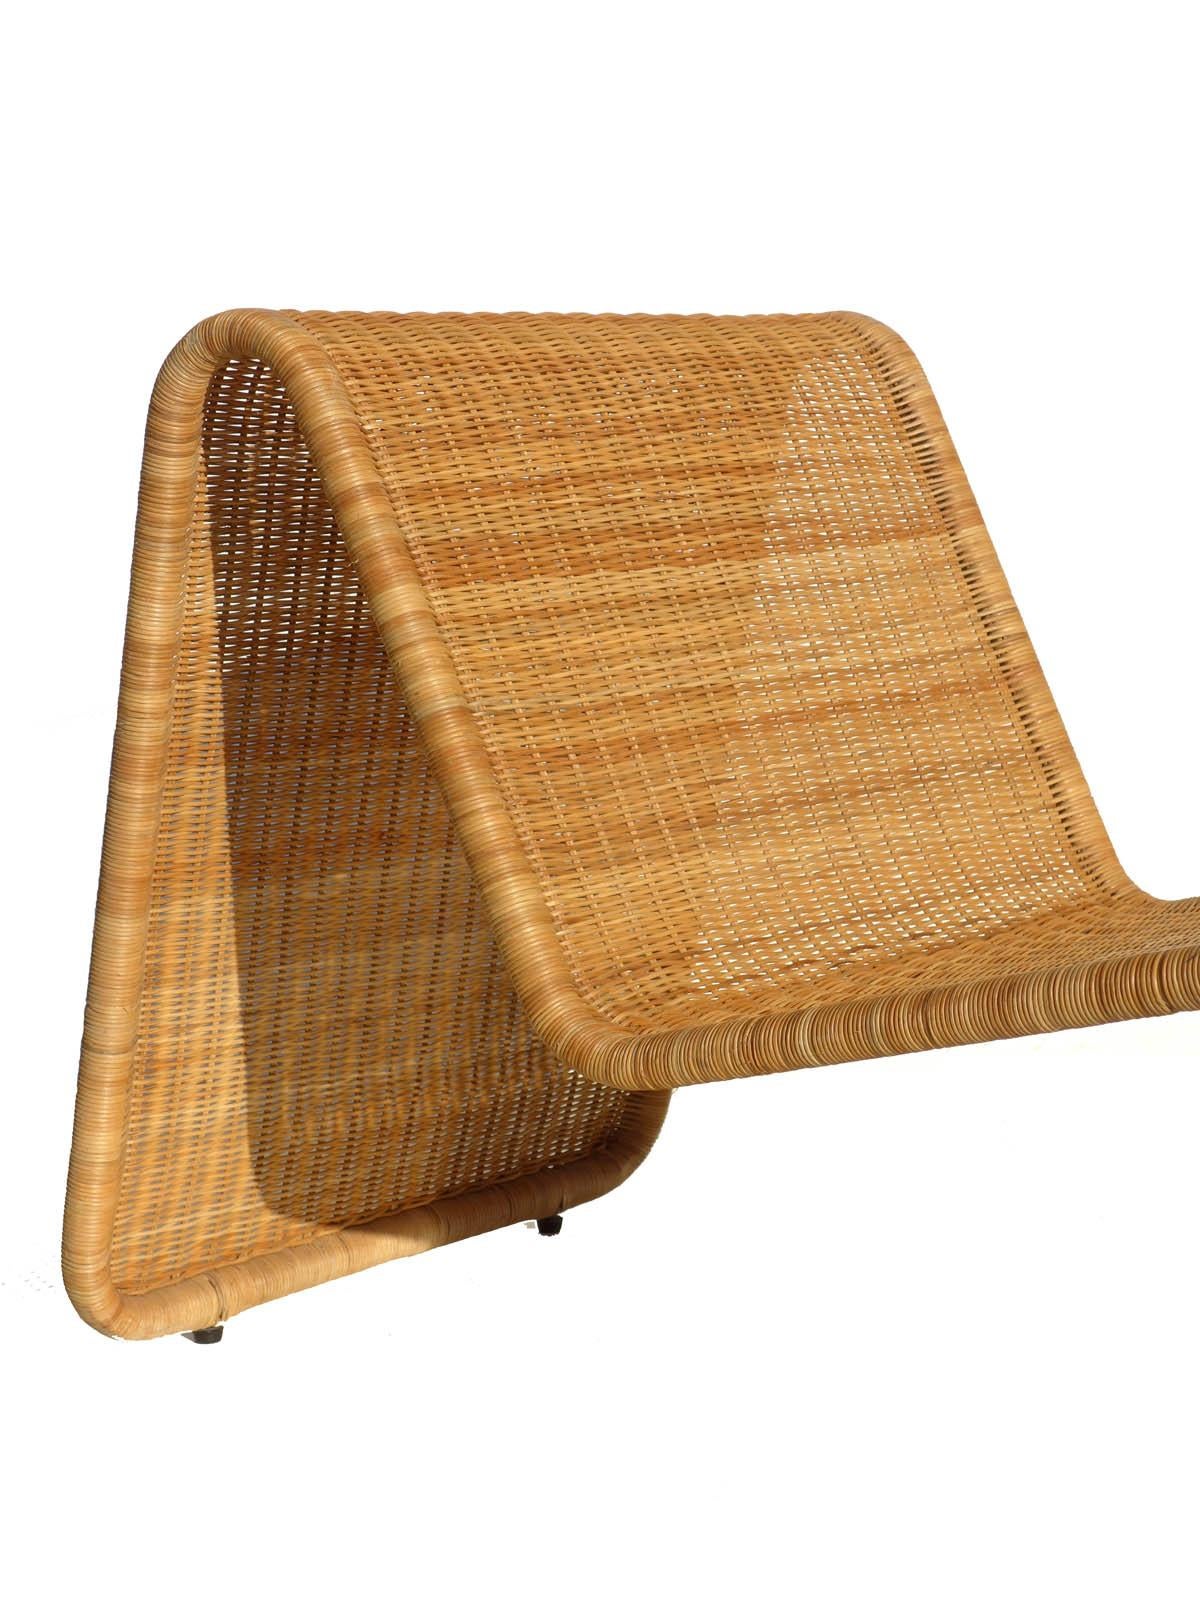 Mid-20th Century 1950s Wicker Rattan Italian Design Midcentury Armchair Lounge Chair, Set of 2